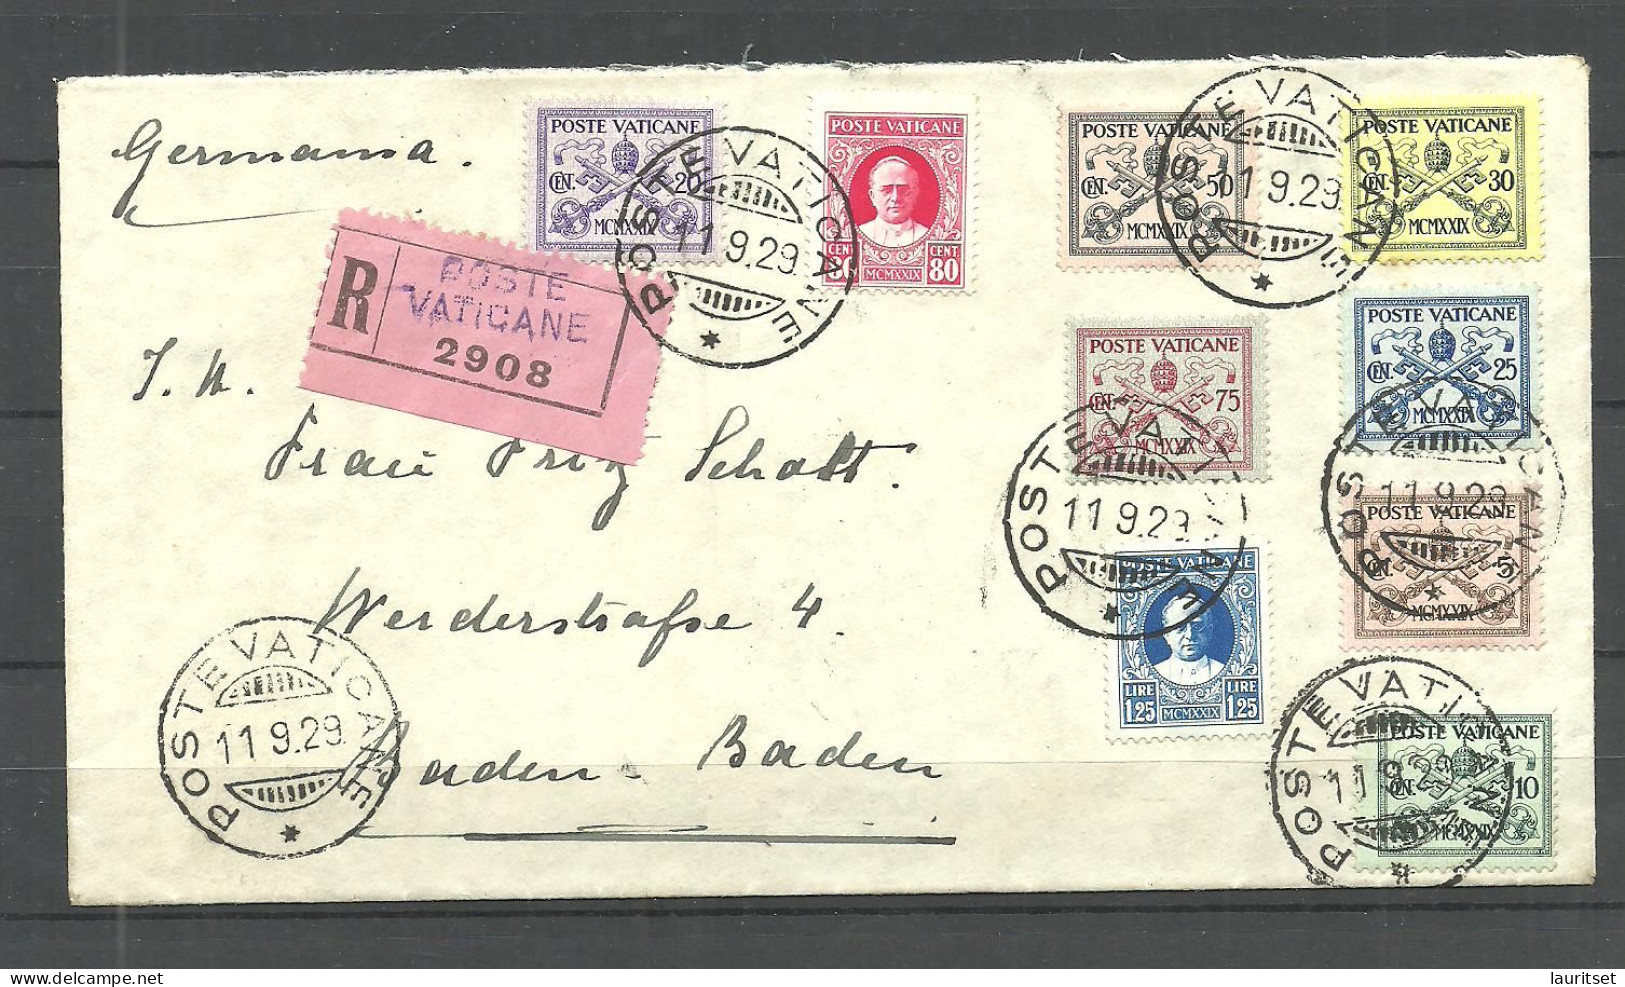 VATICAN Vatikan Poste Varticane 1929 Air Mail Cover Posta Aerea Air Mail Flugpost To Germany Baden Baden - Lettres & Documents